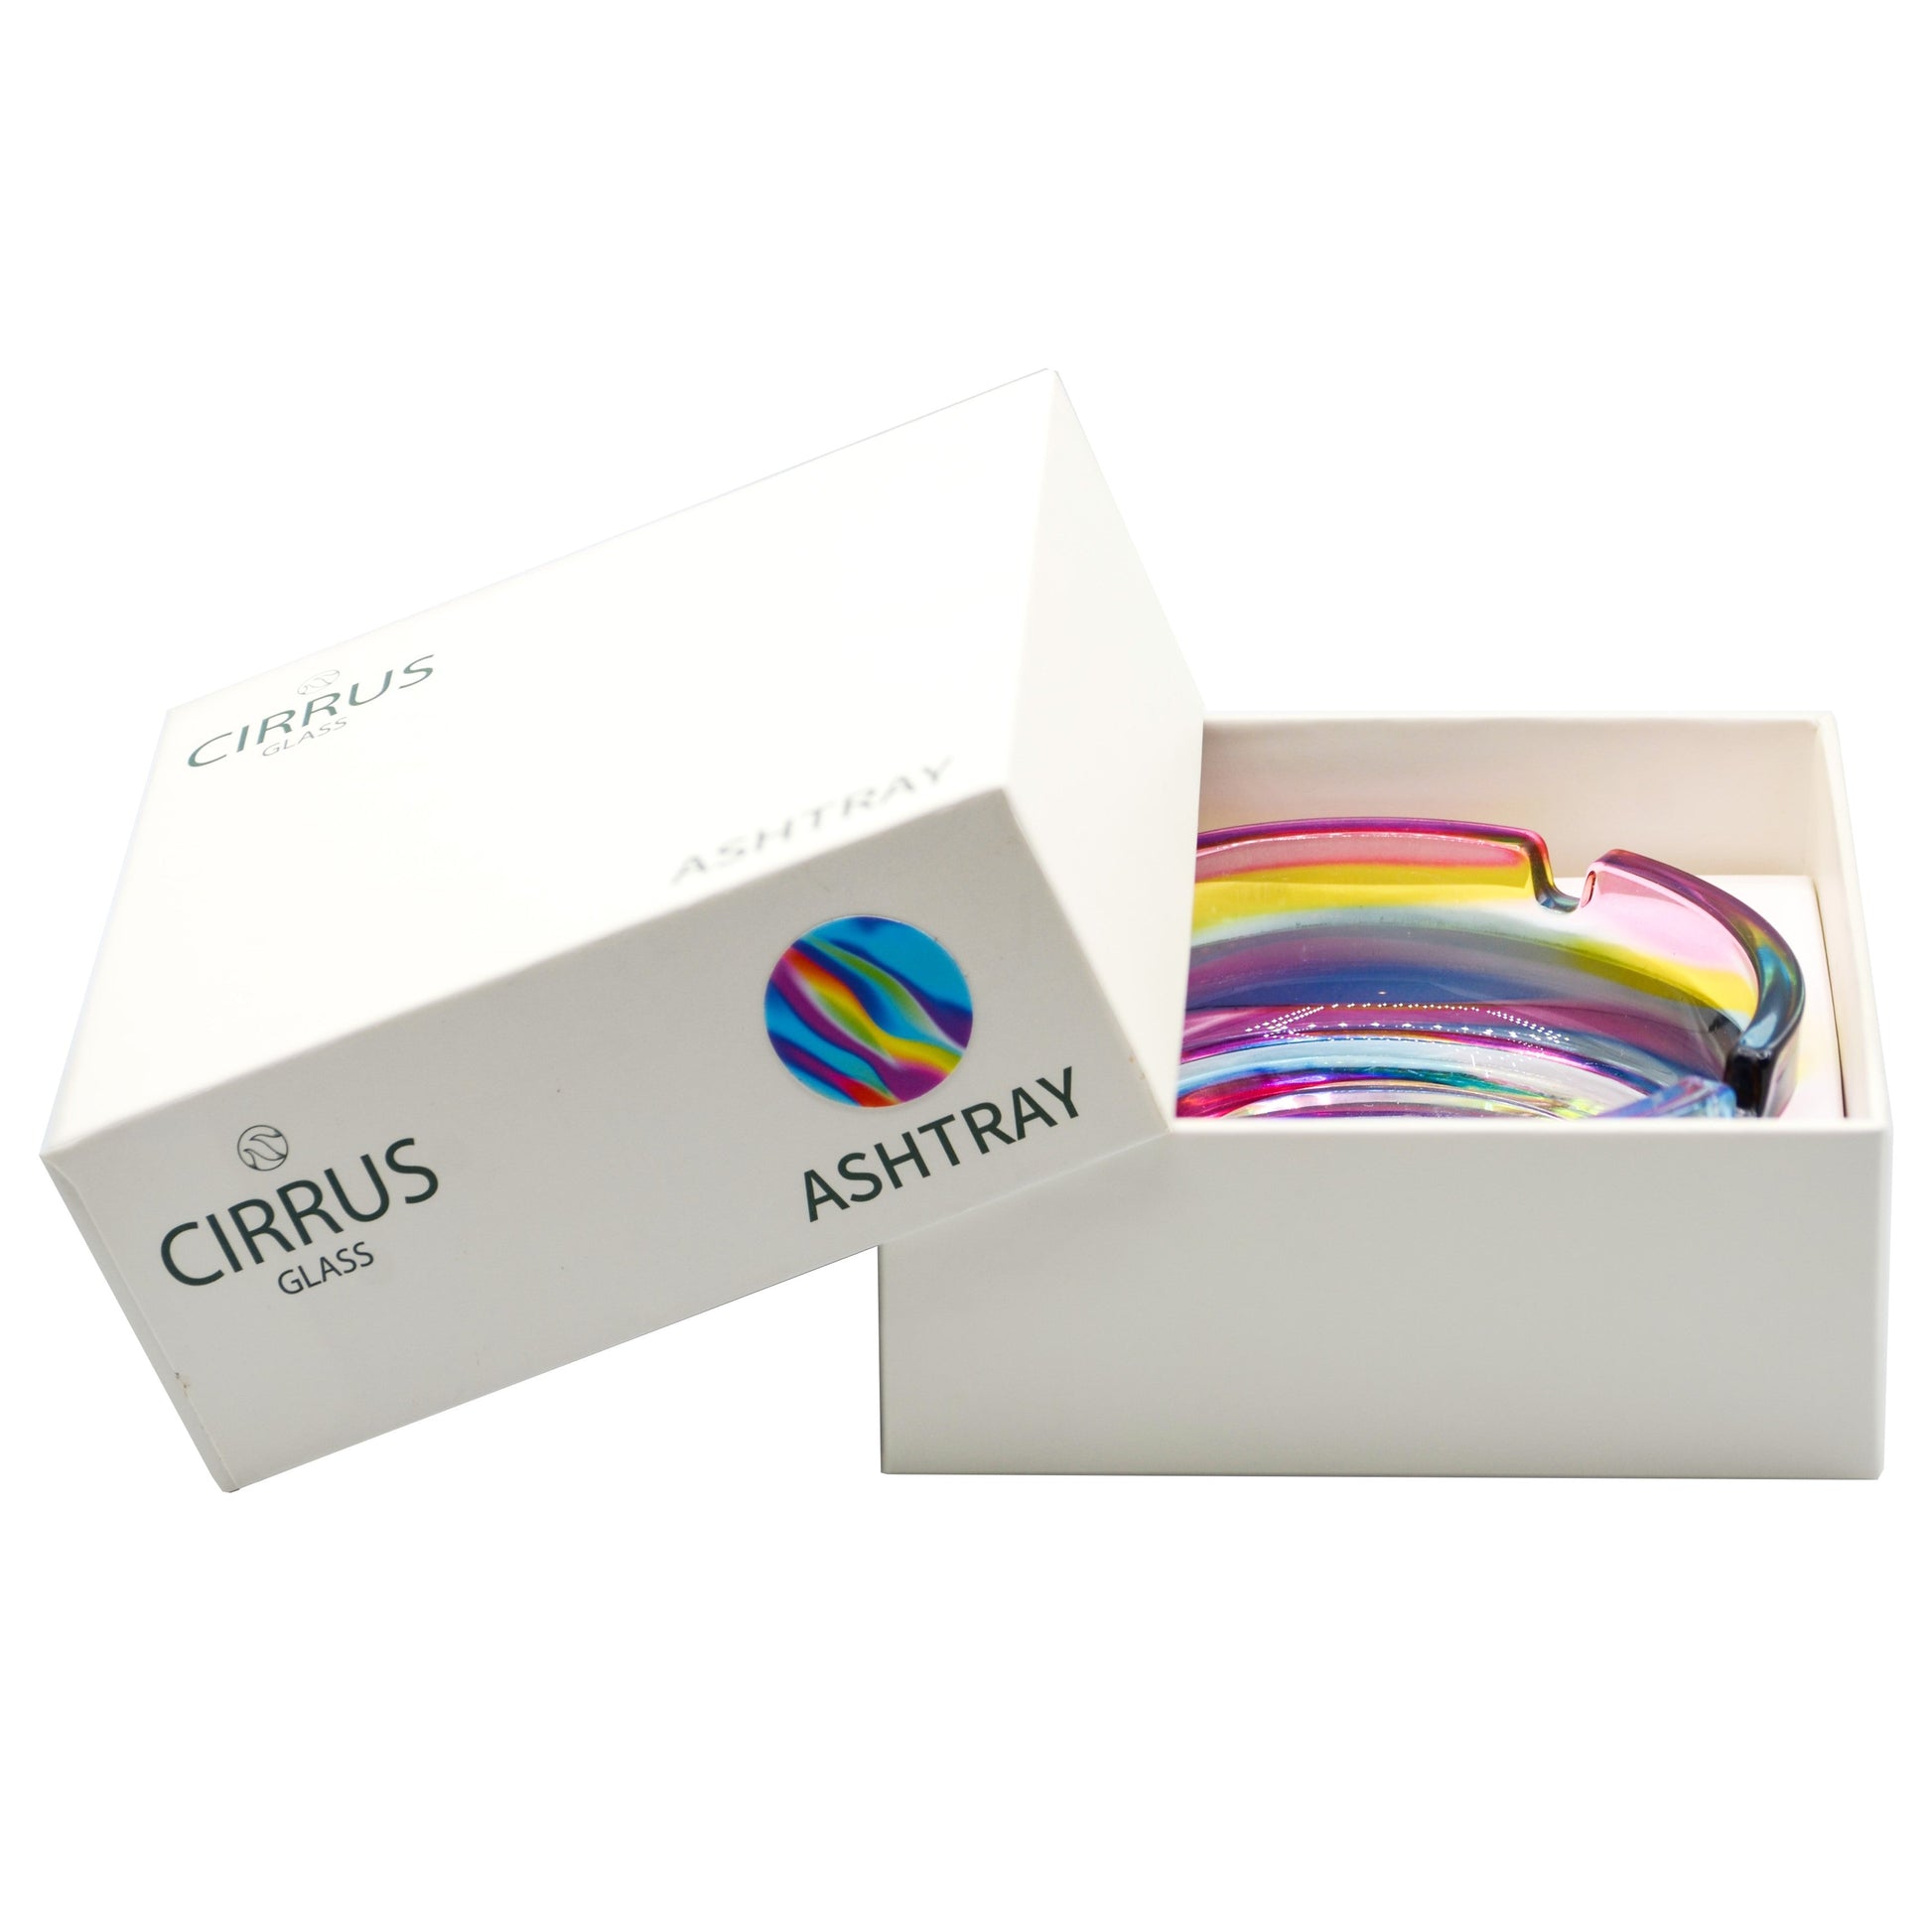 Cirrus Glass Ashtray by Cirrus Glass | Mission Dispensary